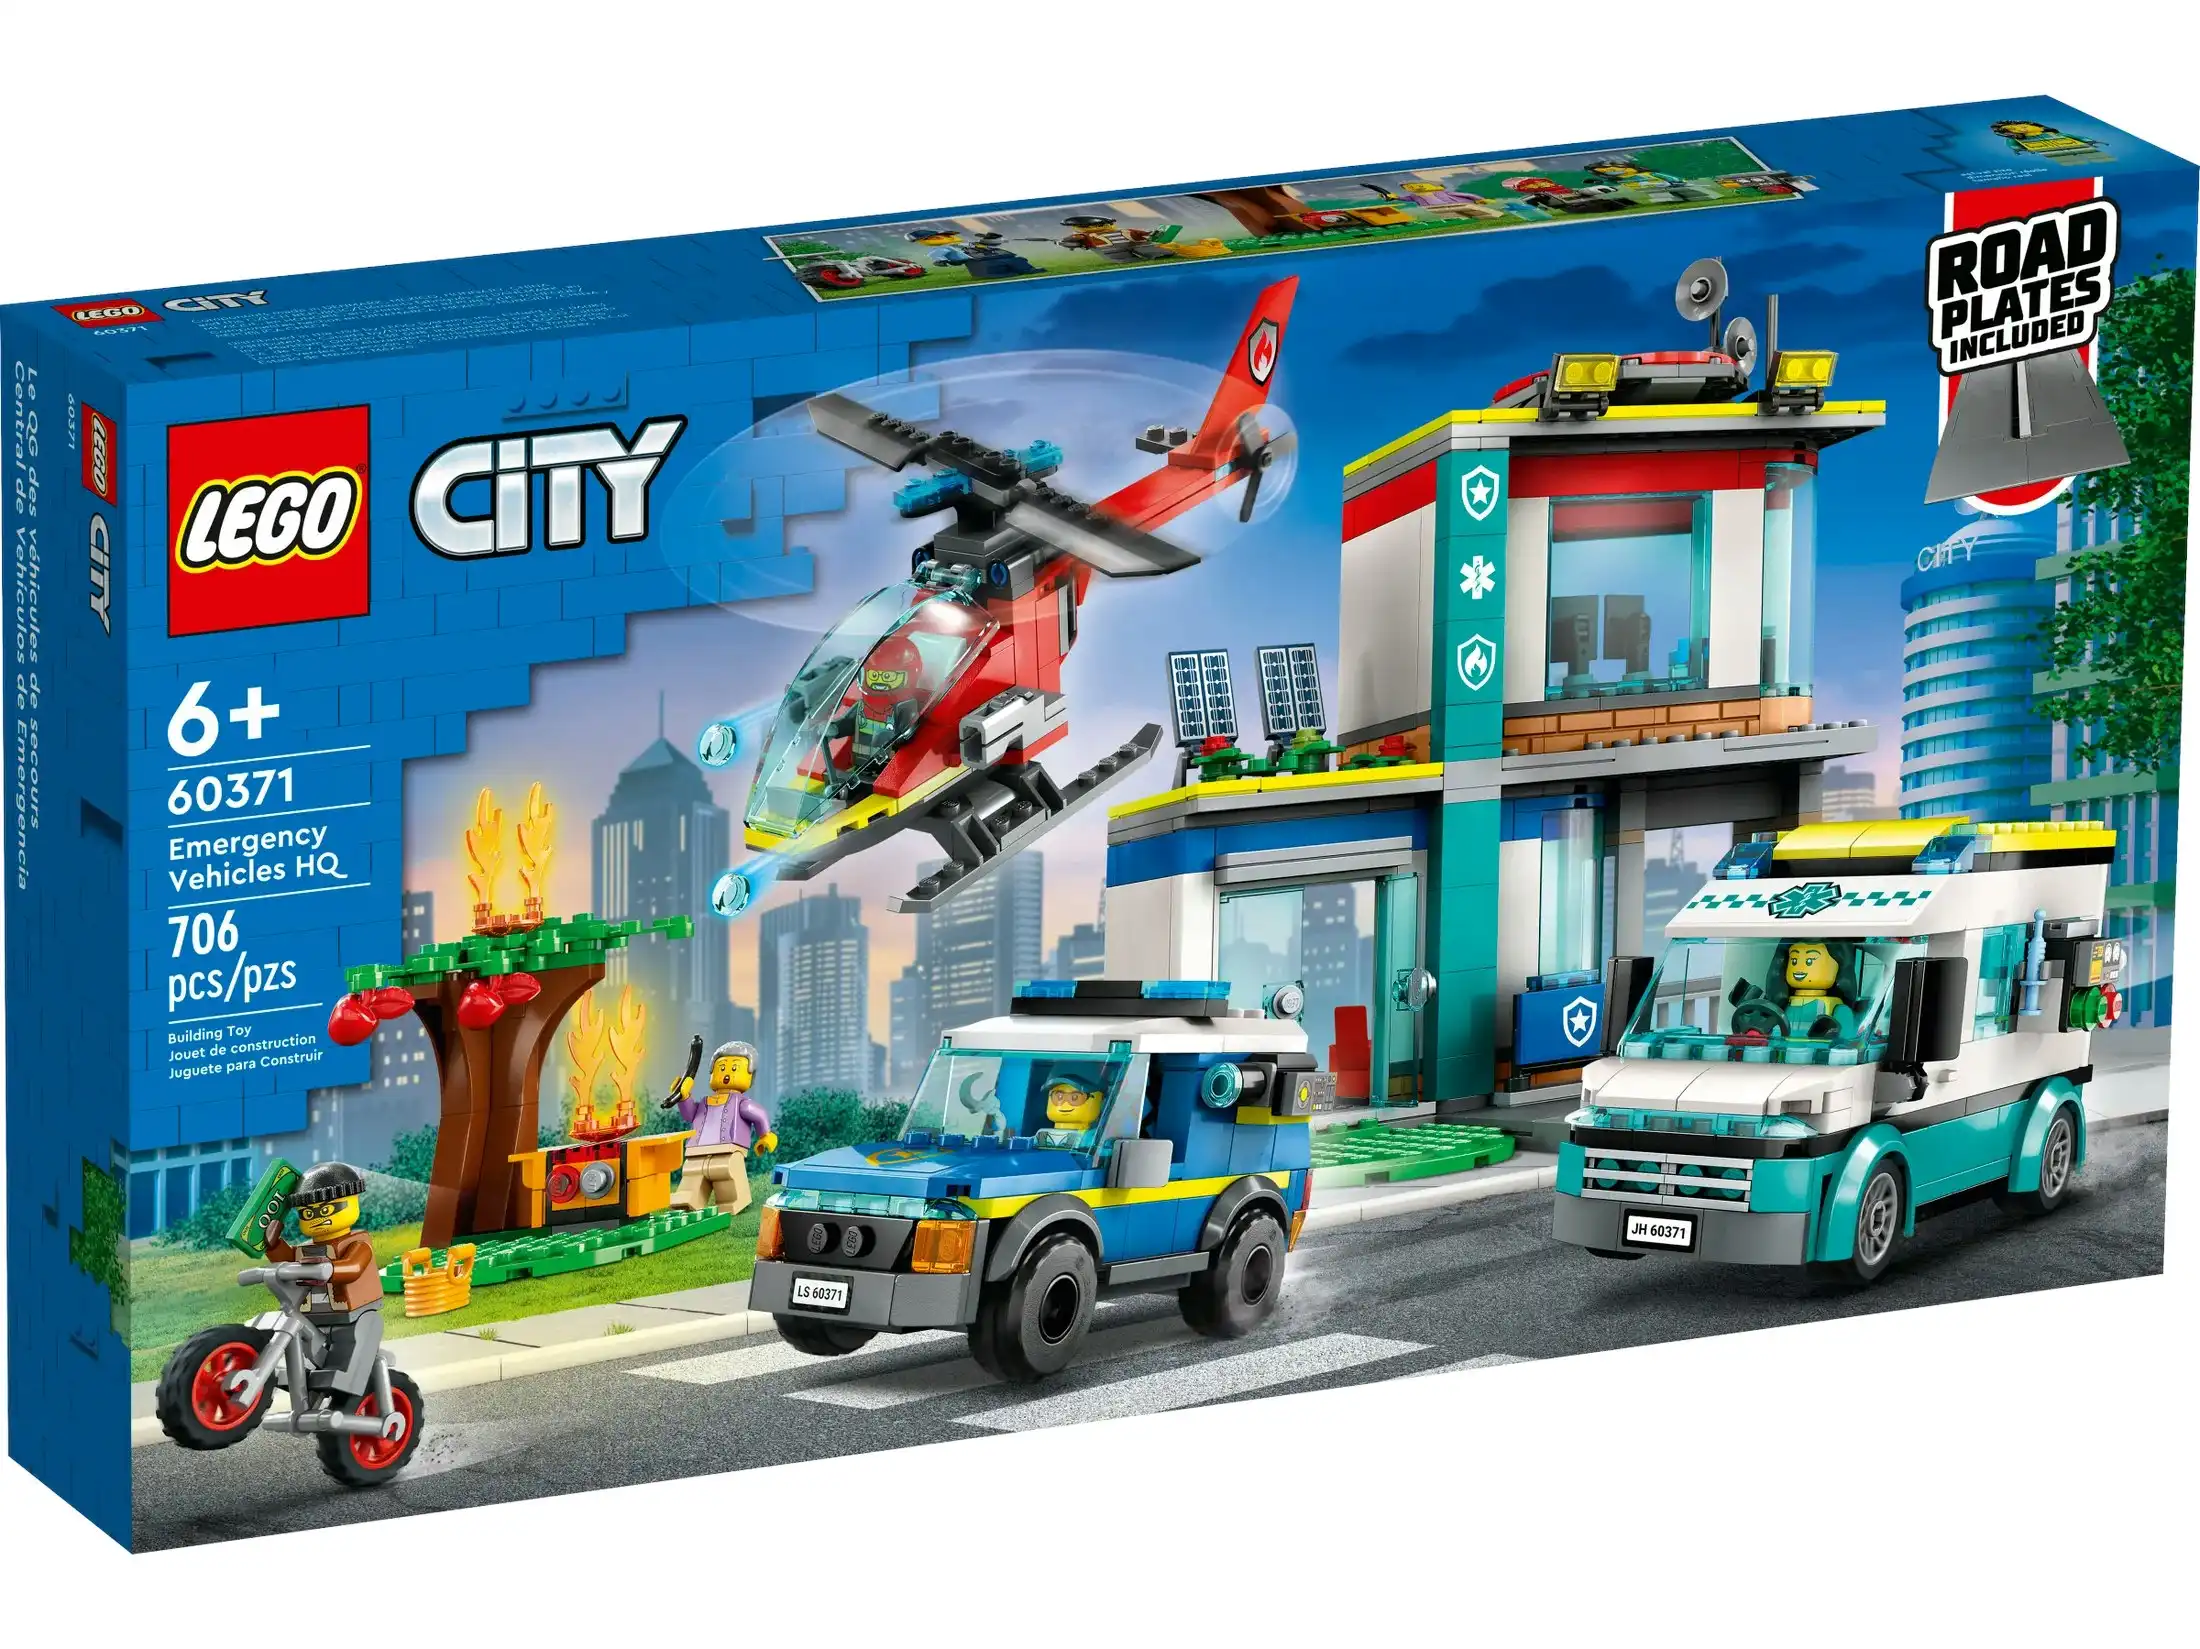 LEGO 60371 Emergency Vehicles HQ - City